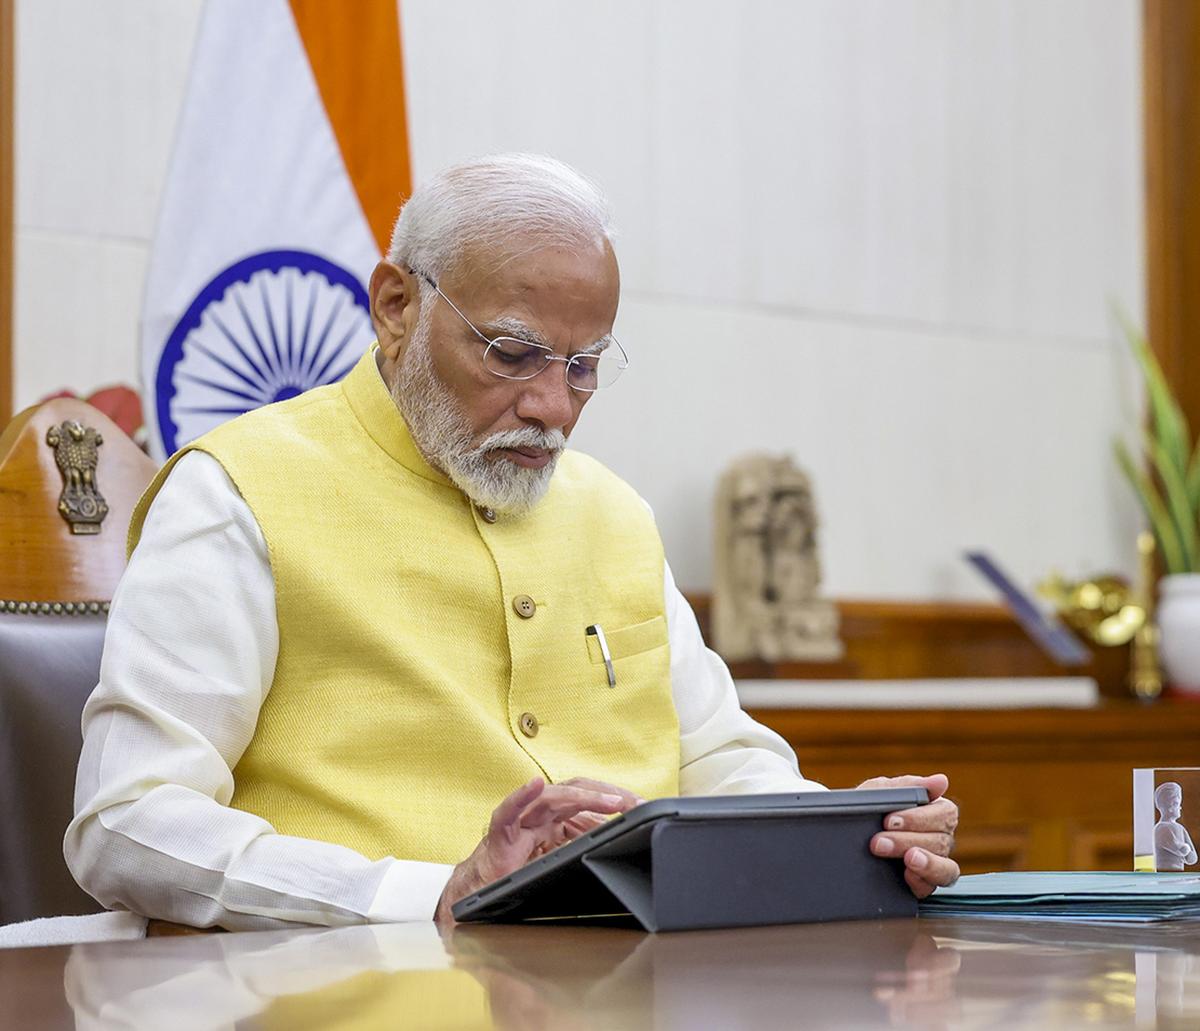 PM Modi asks followers to remove 'Modi ka Parivar' from social media  handles - The Hindu